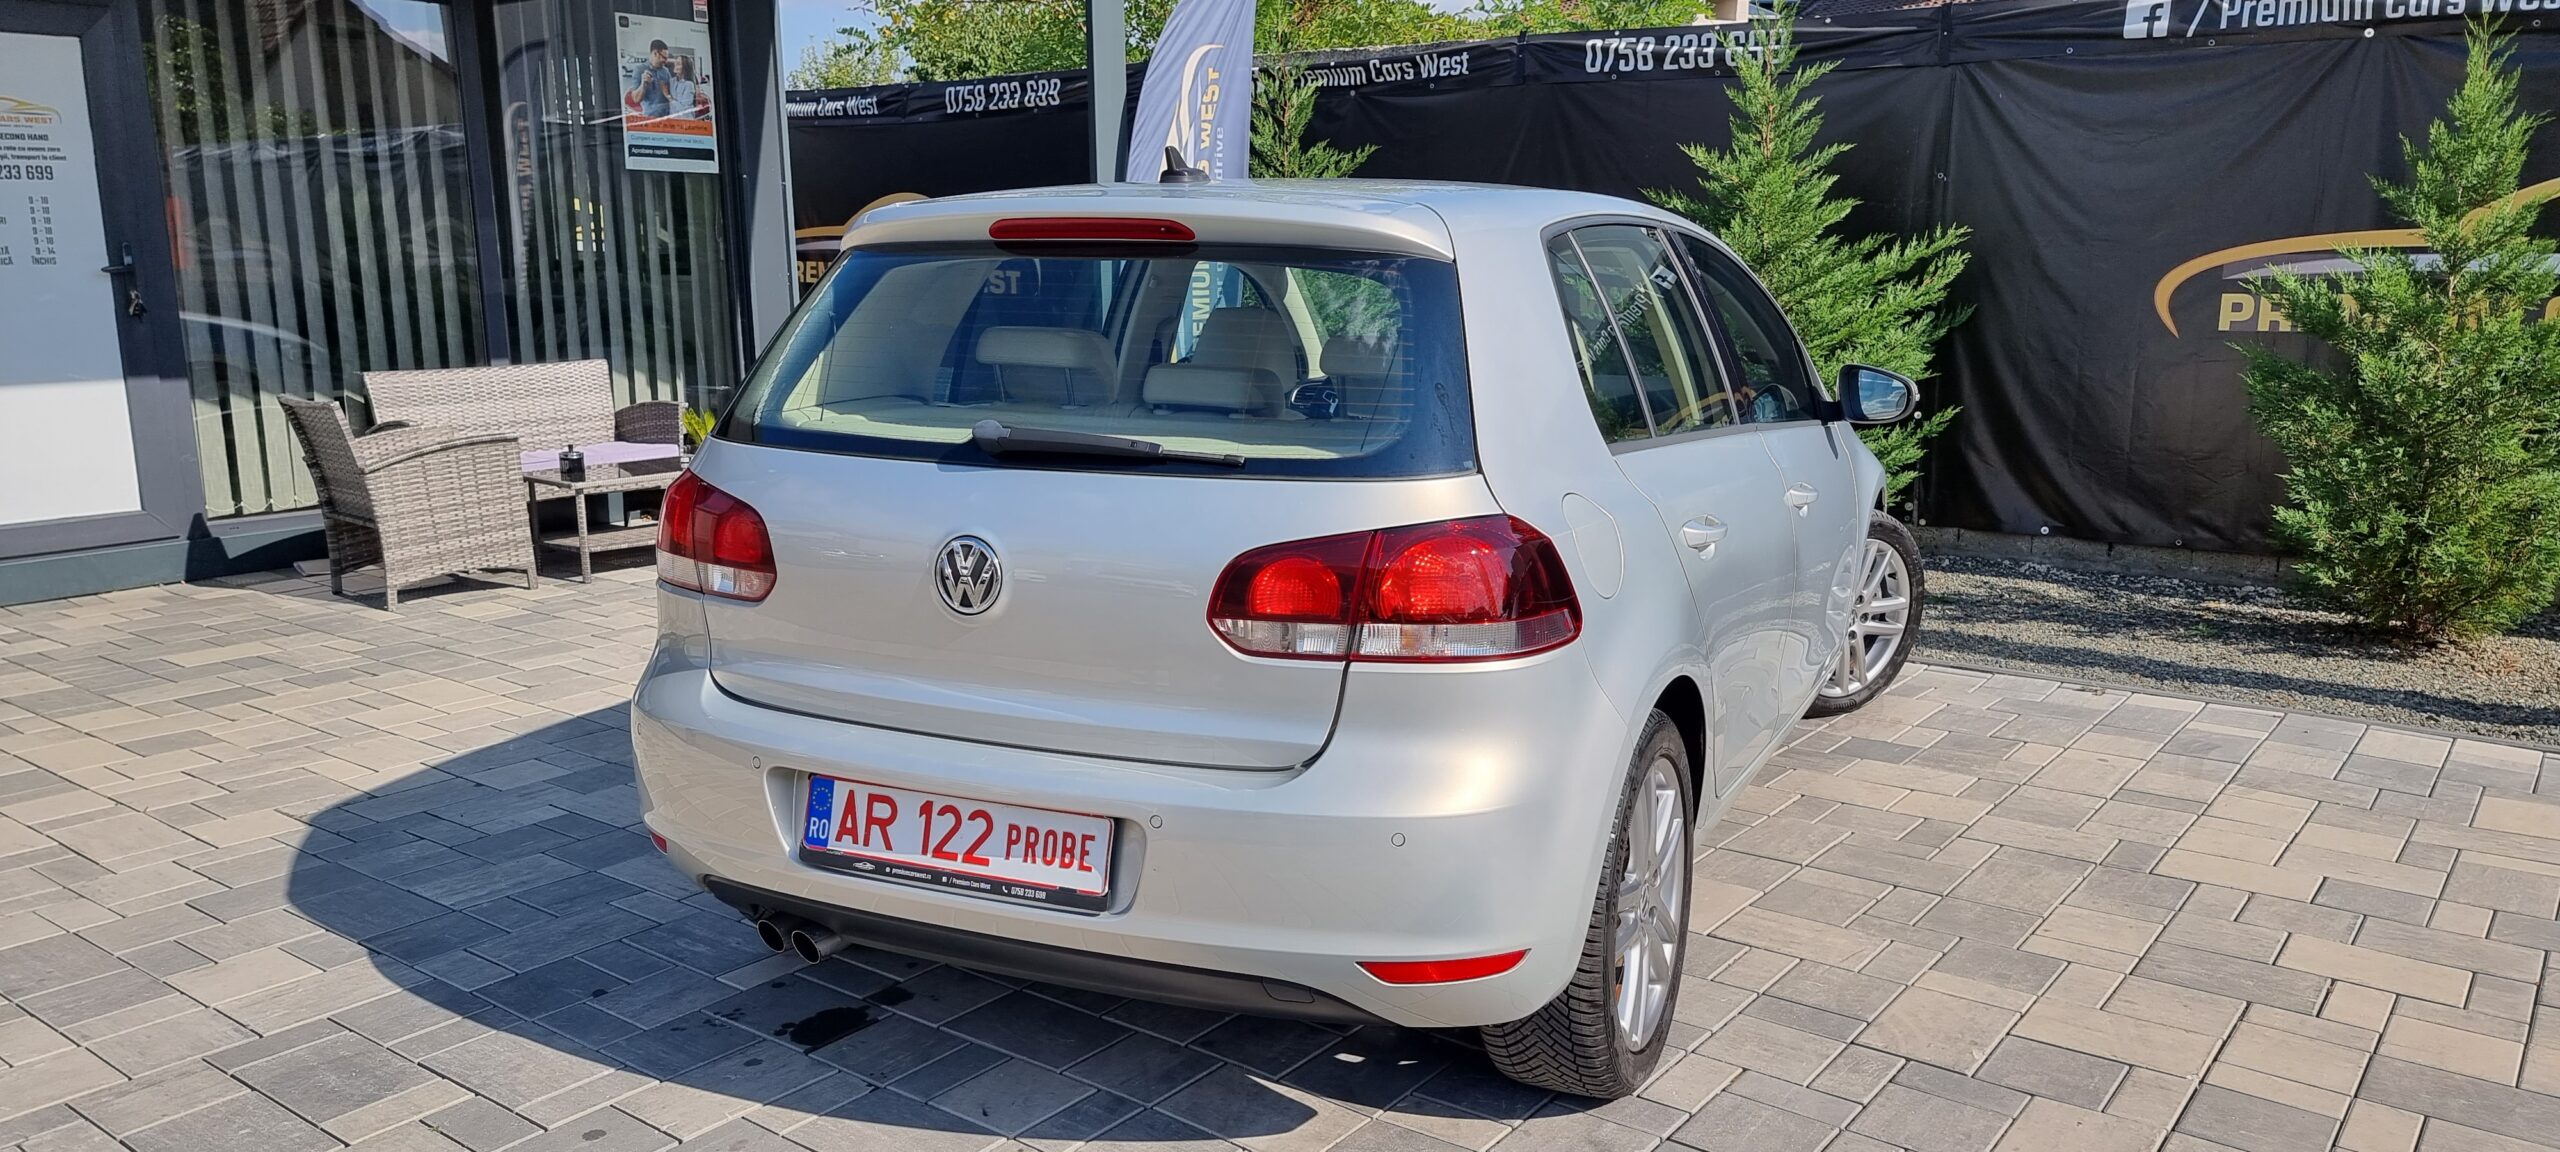 VW GOLF VI AUTOMAT HIGHLINE, 1.4 TFSI, 160 CP, EURO 5, AN 2009